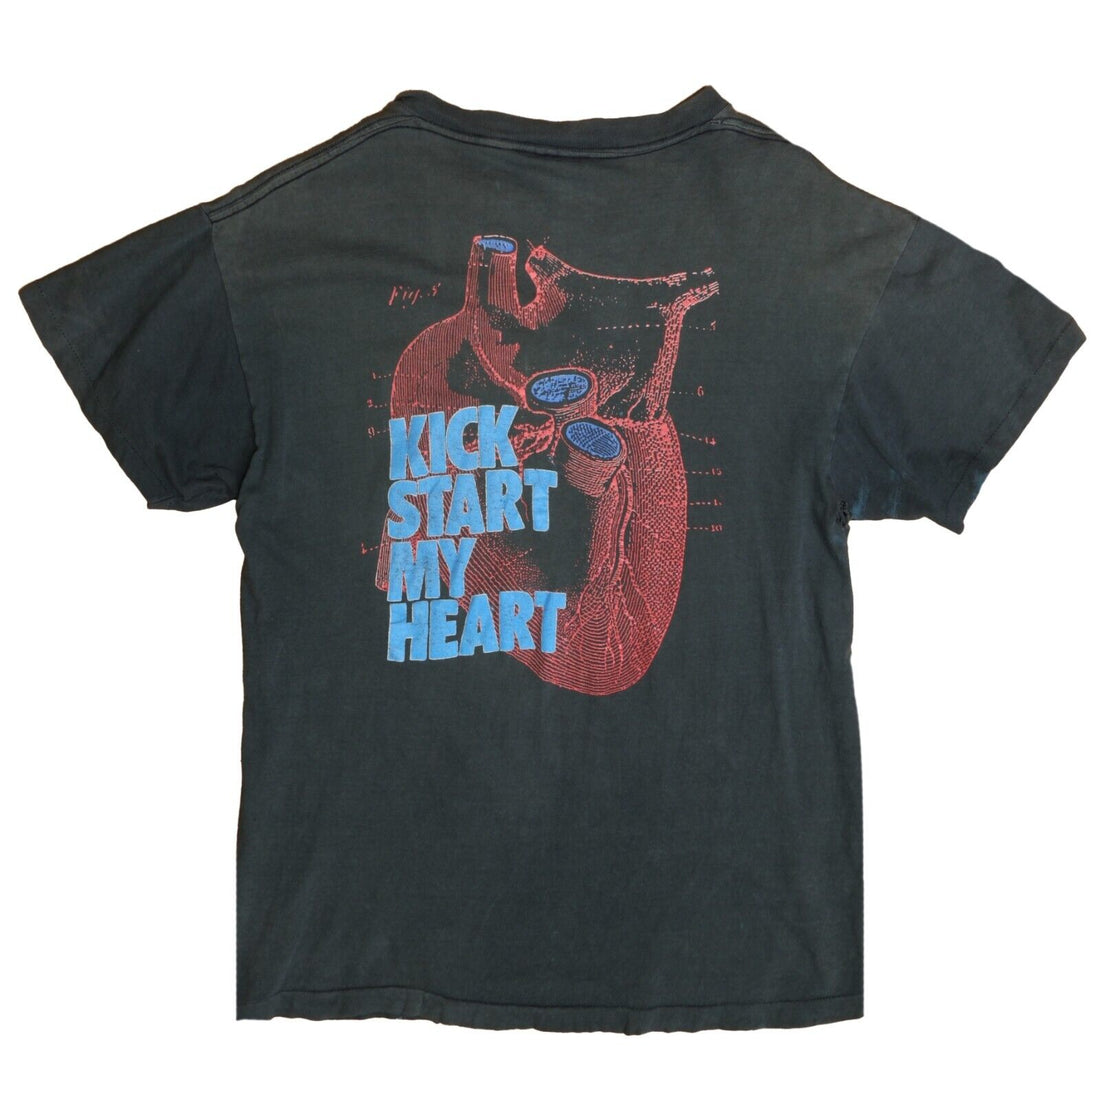 Vintage Motley Crue Kick Start My Heart T-Shirt Size Medium Band Tee 1989 80s